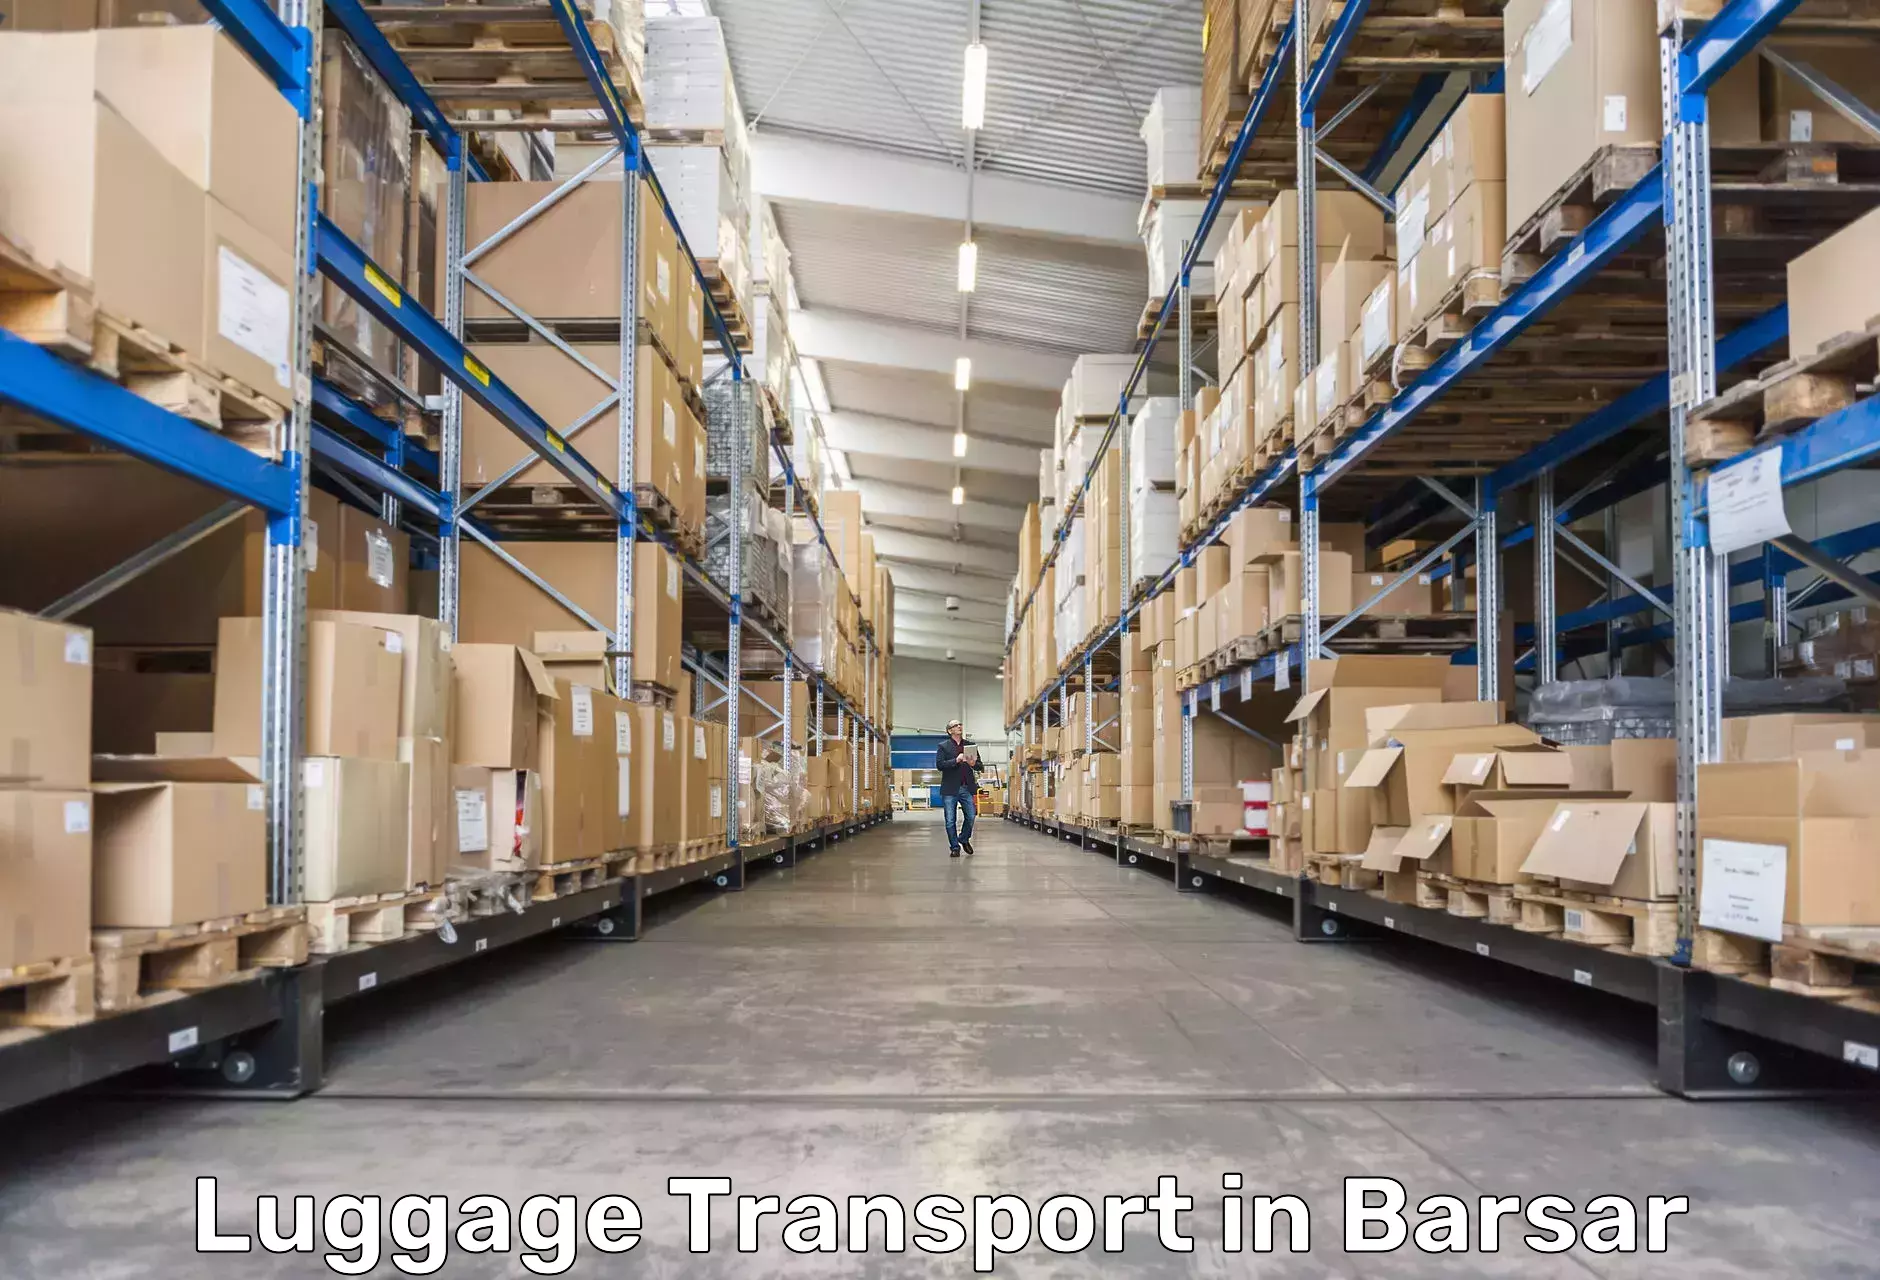 Holiday season luggage delivery in Barsar